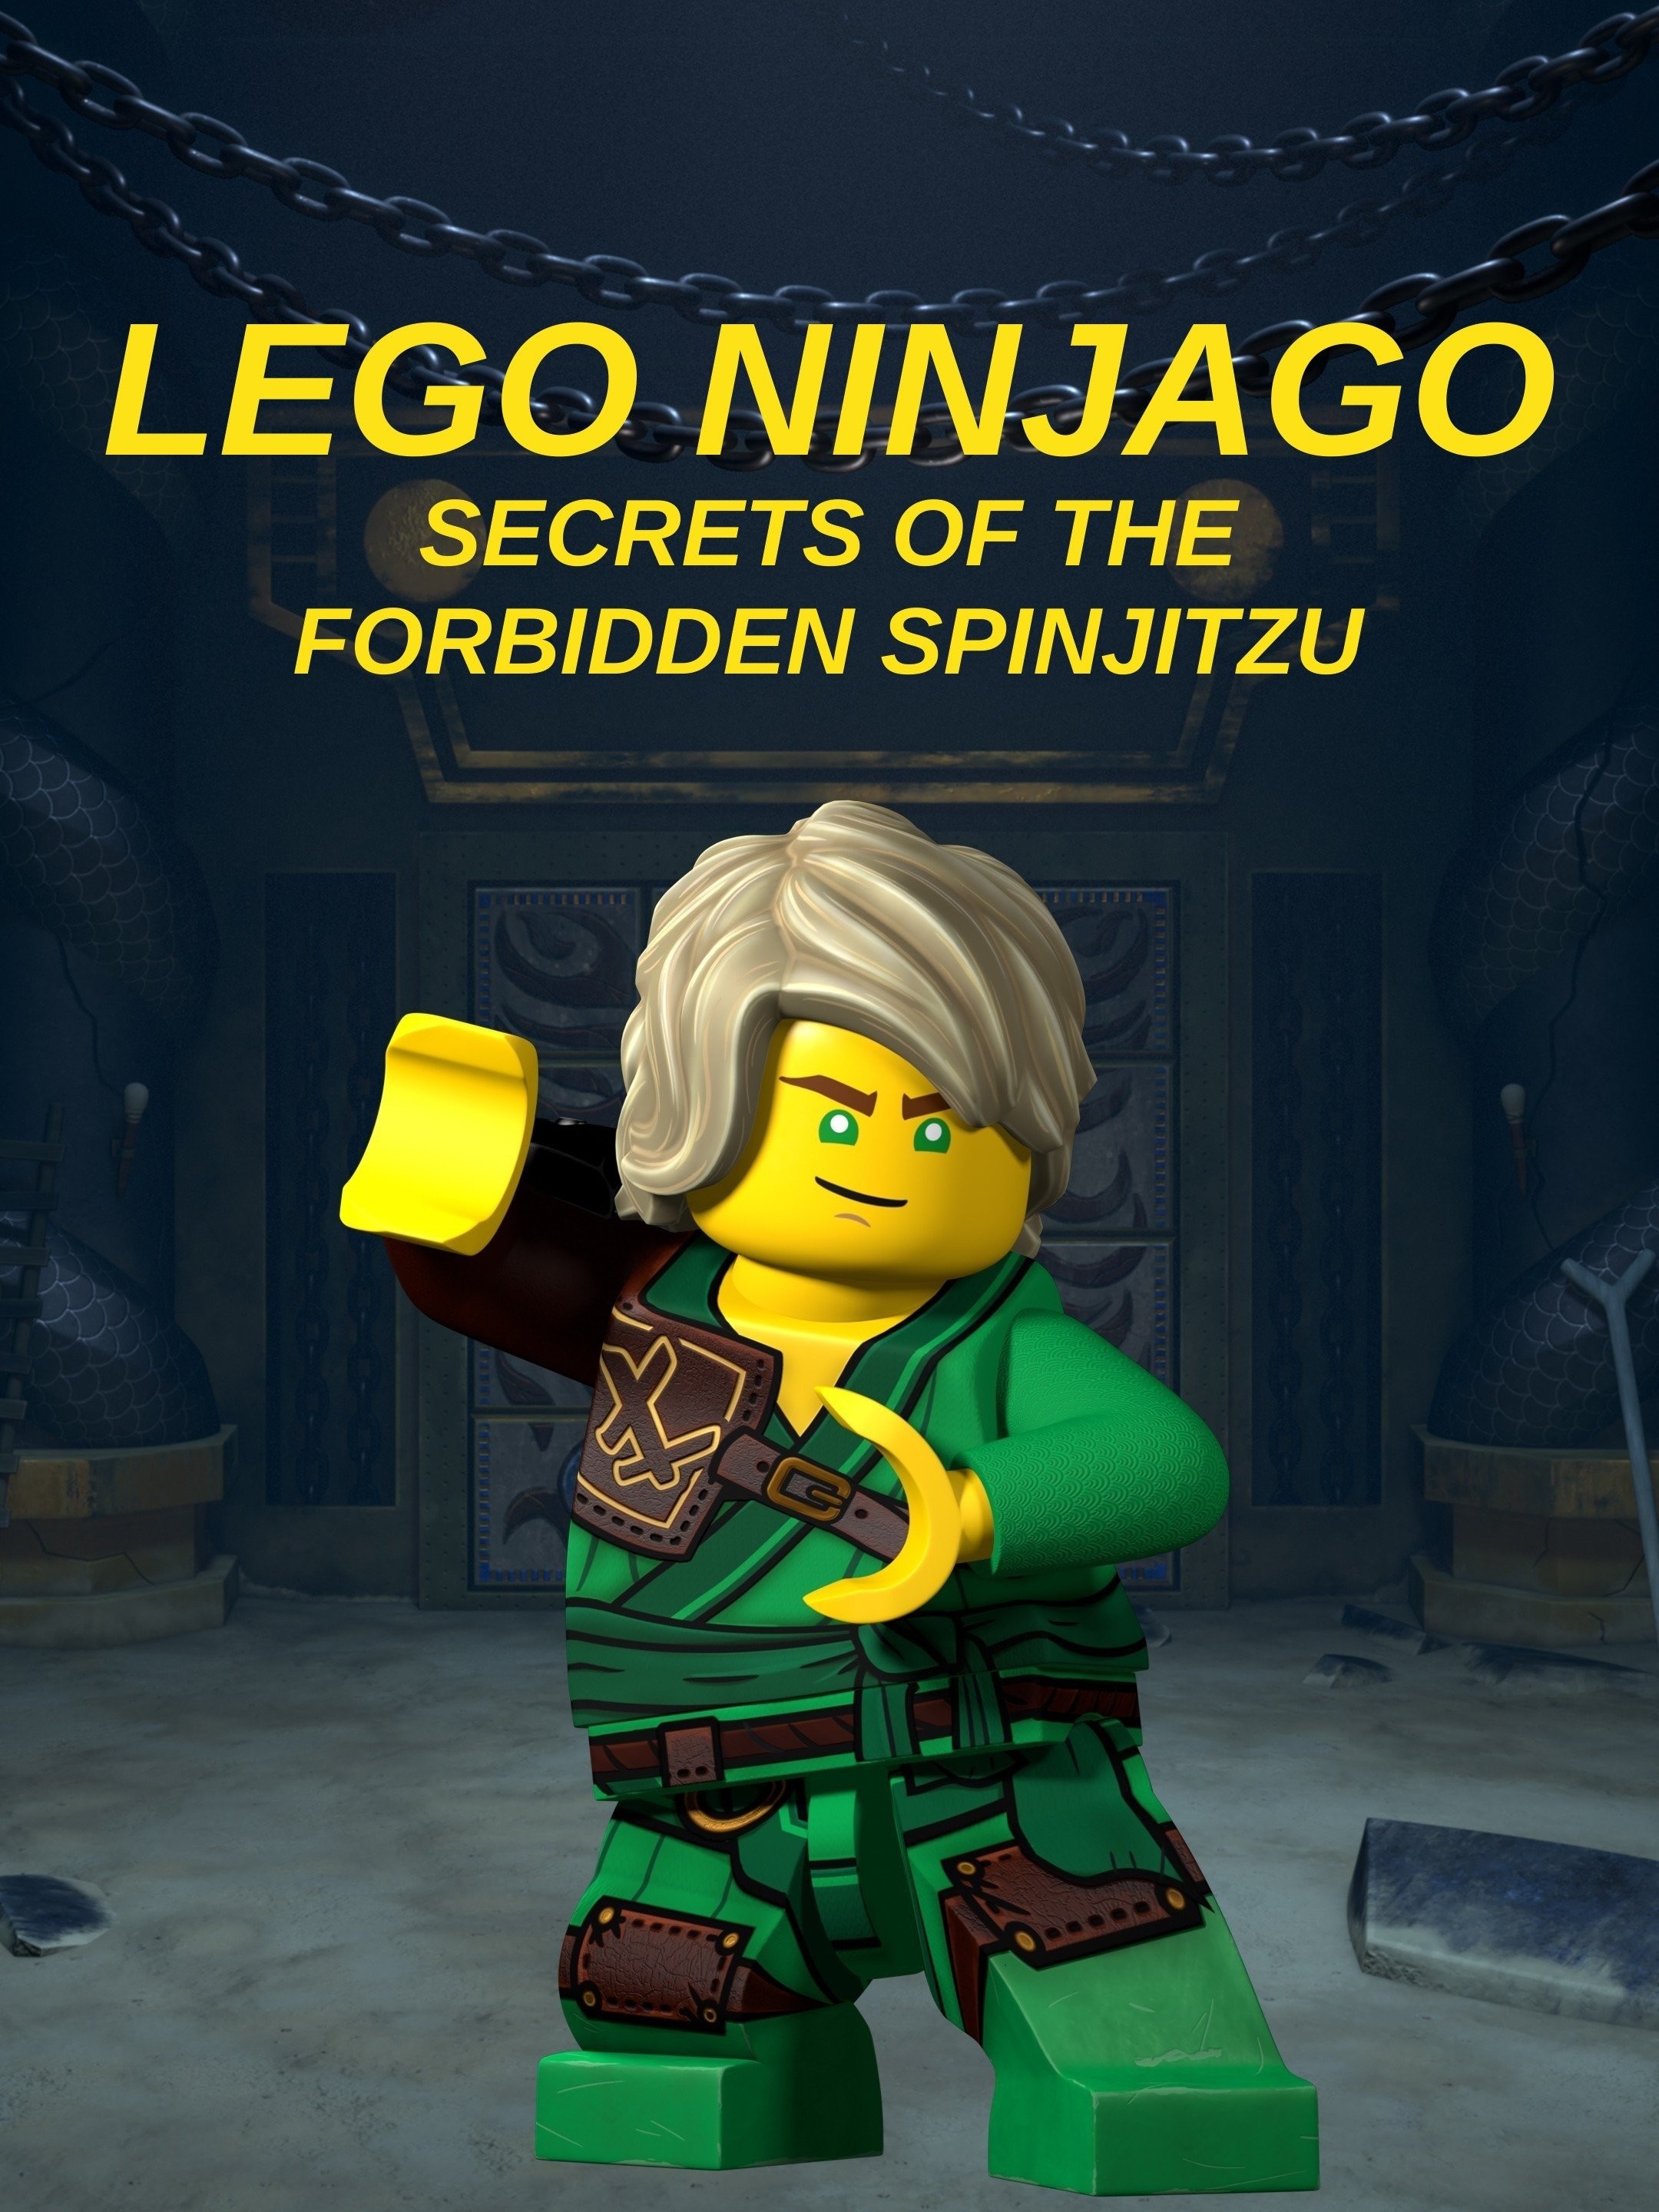 Ninjago: Secrets of the Forbidden Spinjitzu - Wikipedia